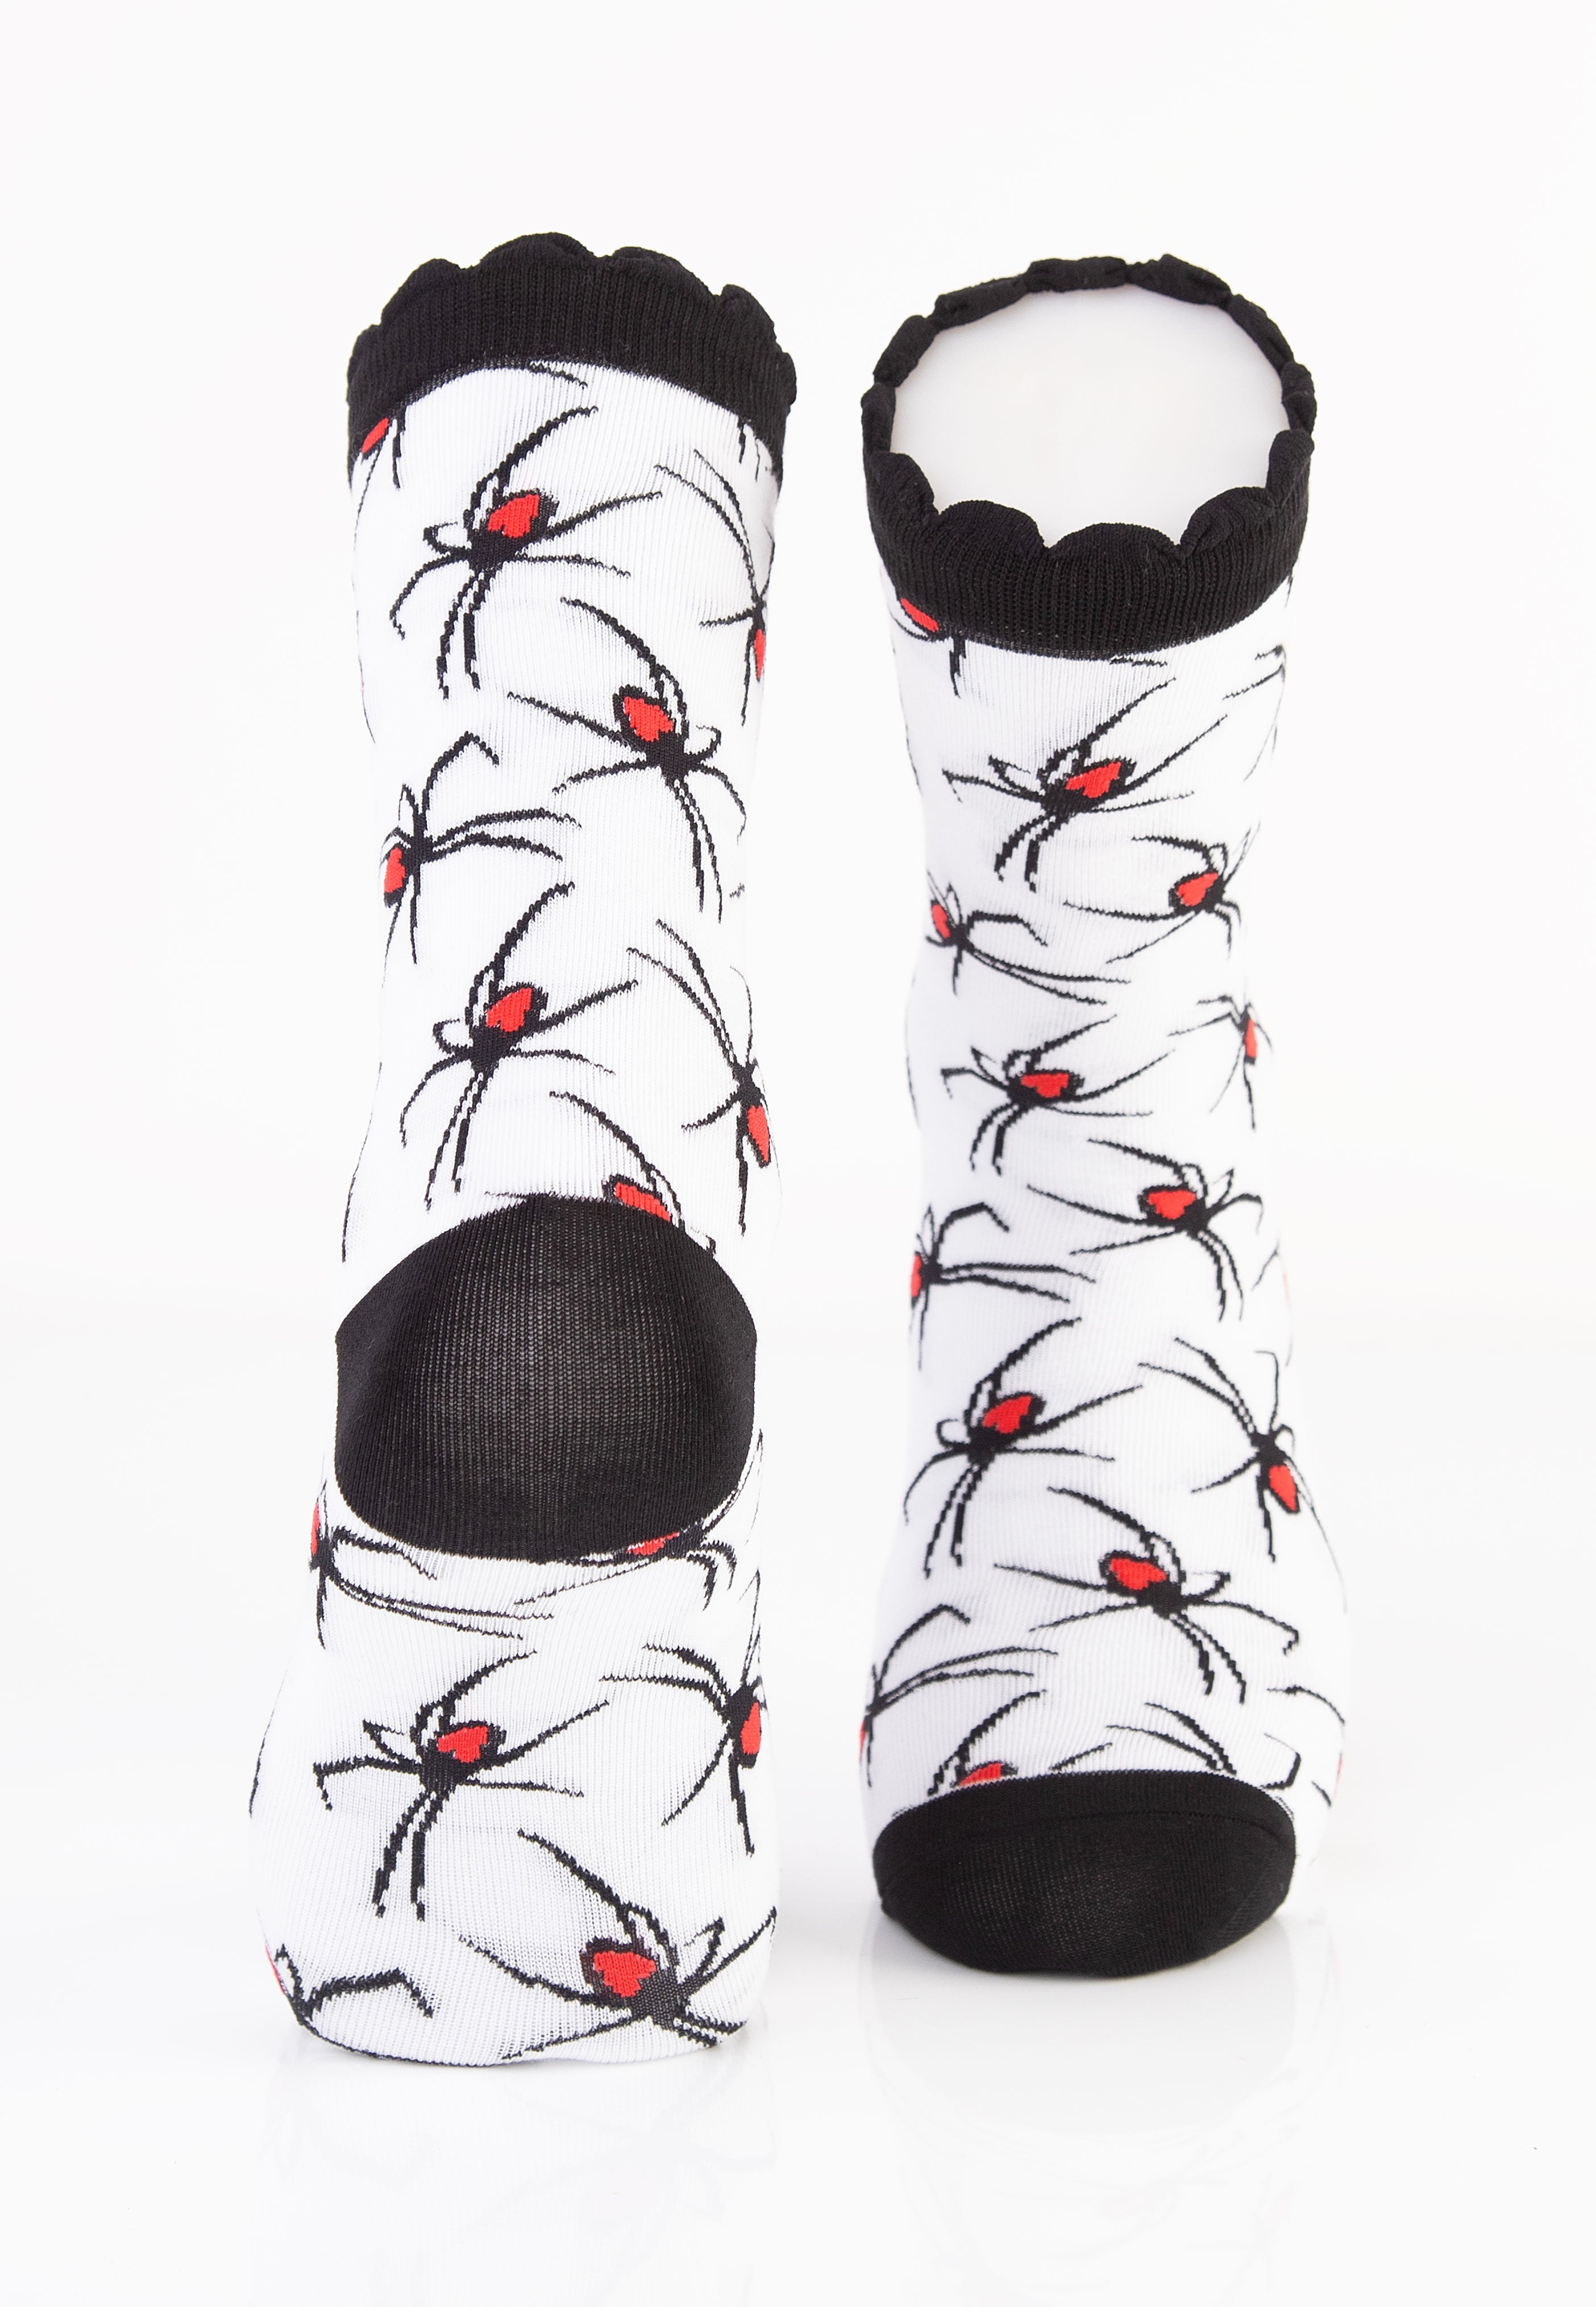 Foxblood x Eliza Sidney - White Spider Black/White - Socks